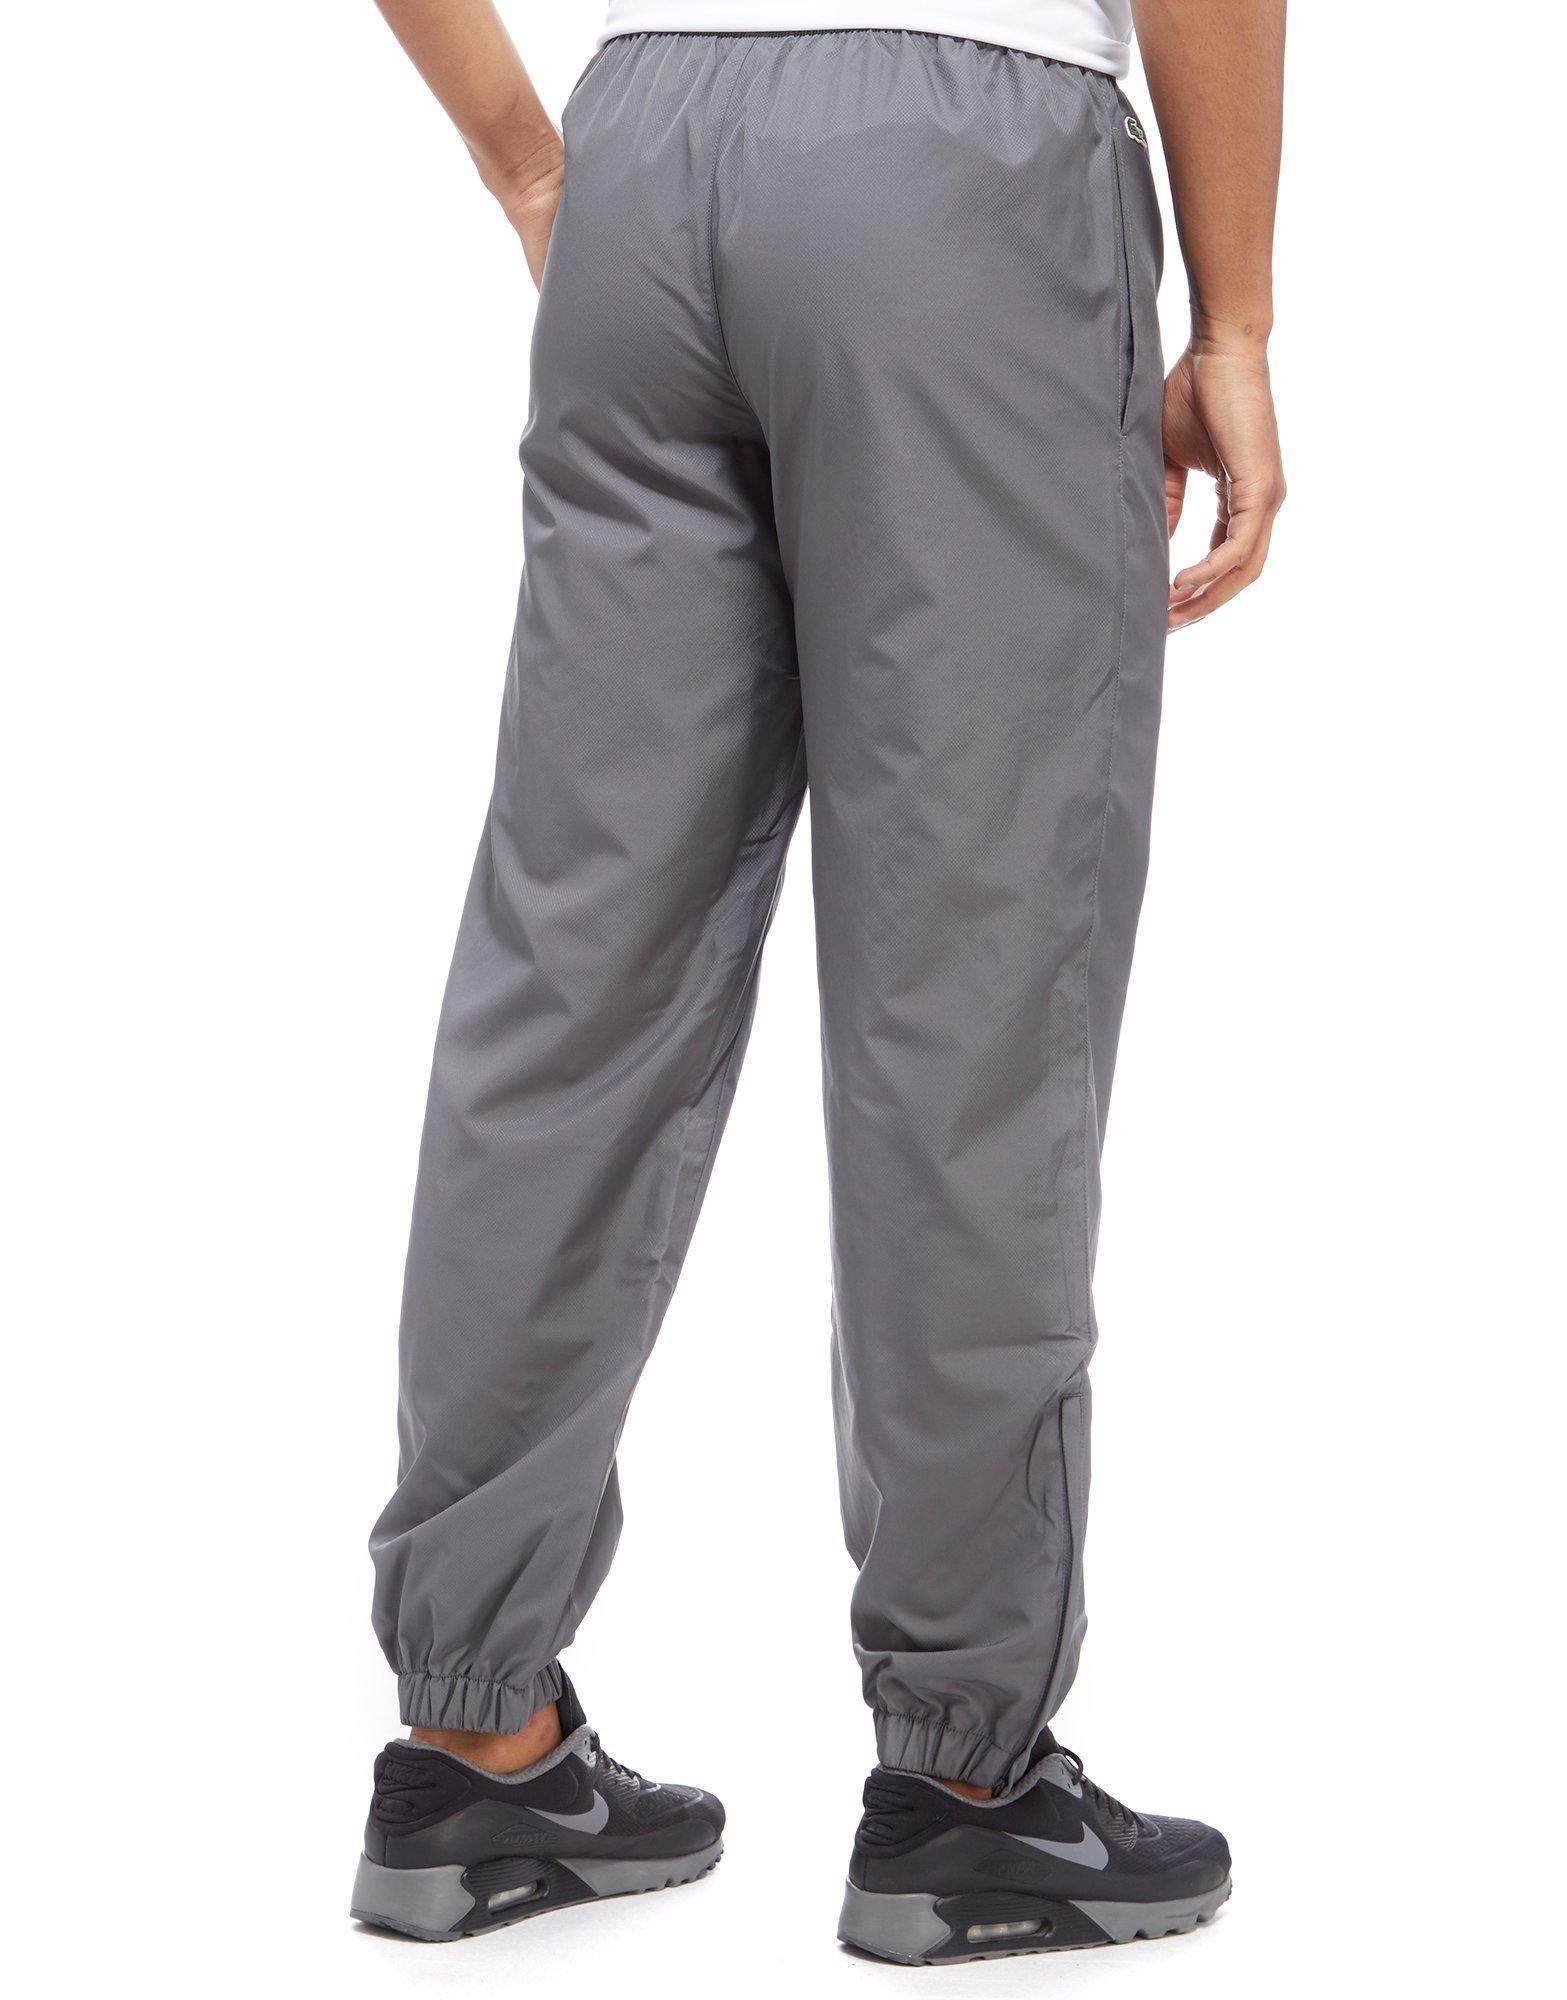 grey lacoste guppy pants